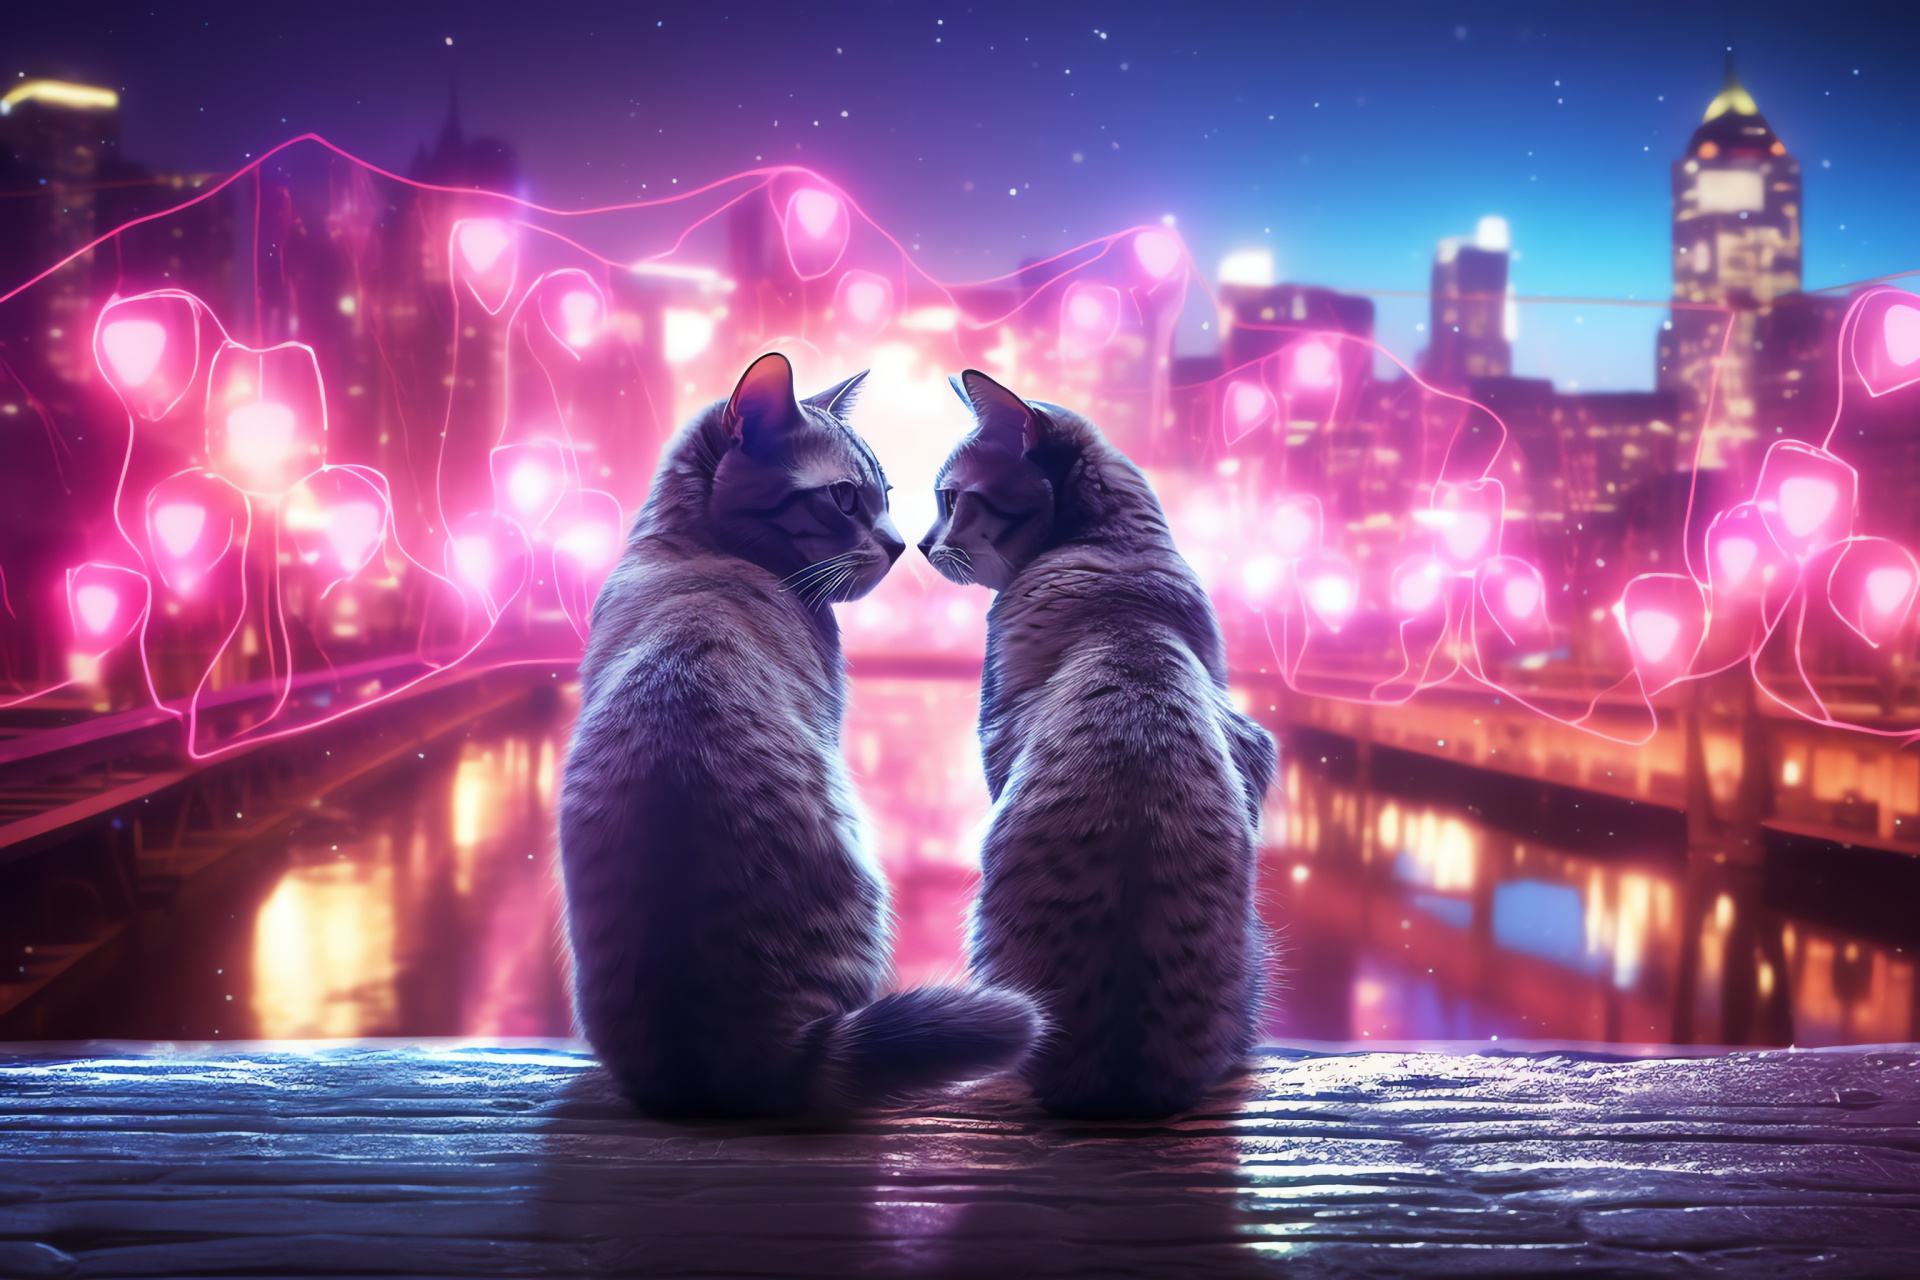 Urban Valentine's felines, cat couple against skyline, evening ambient lighting, metropolitan romantic scene, dim city glow, HD Desktop Wallpaper